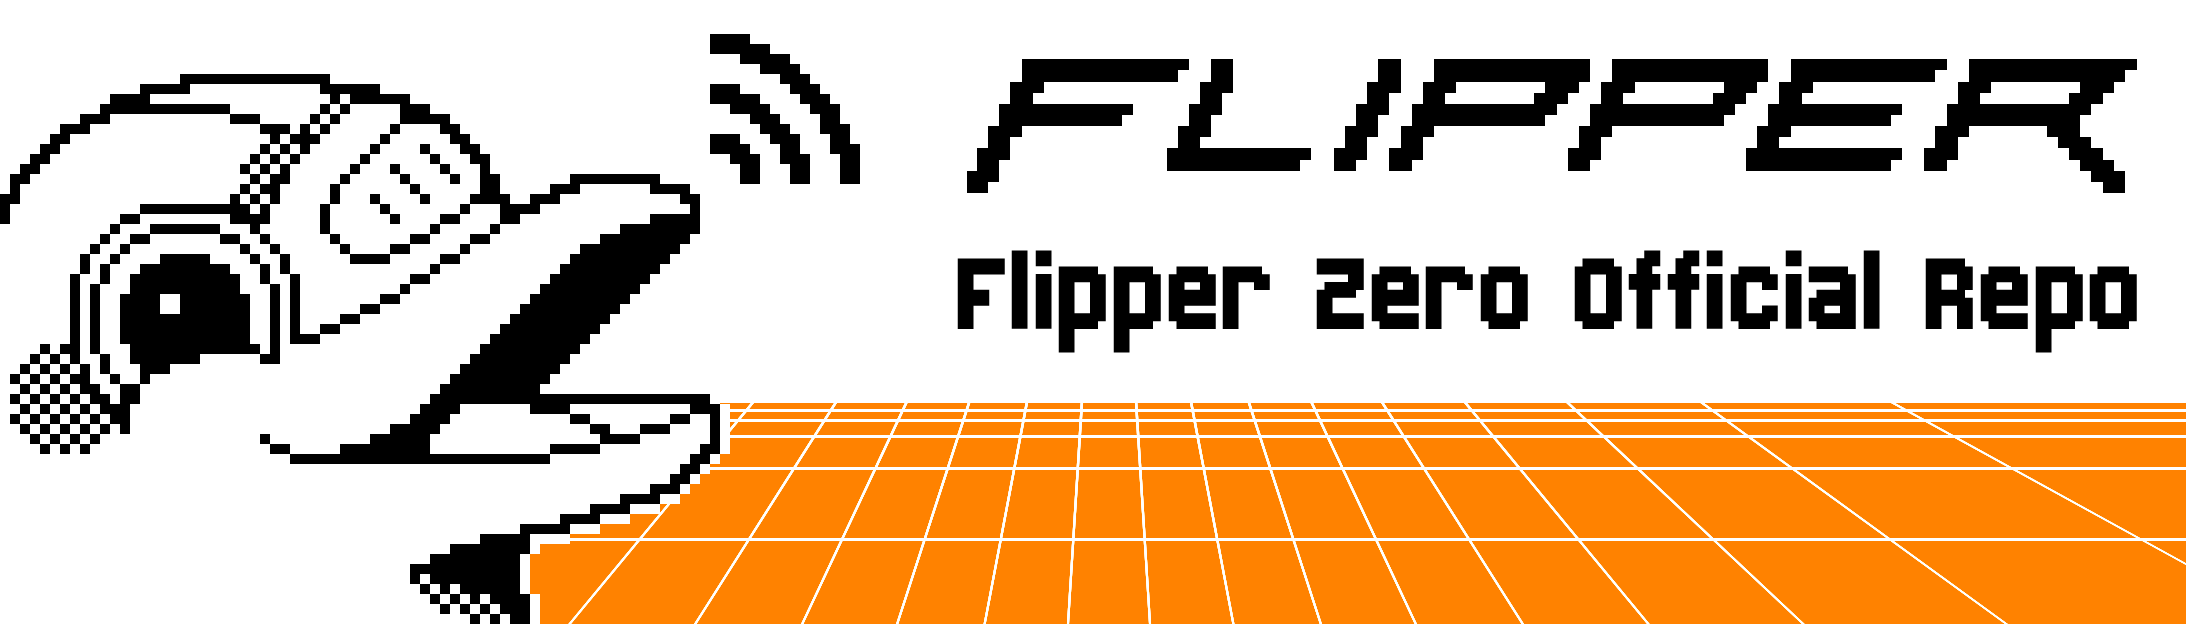 带有文本的Dophin的像素艺术：Flipper Zero Official Repo